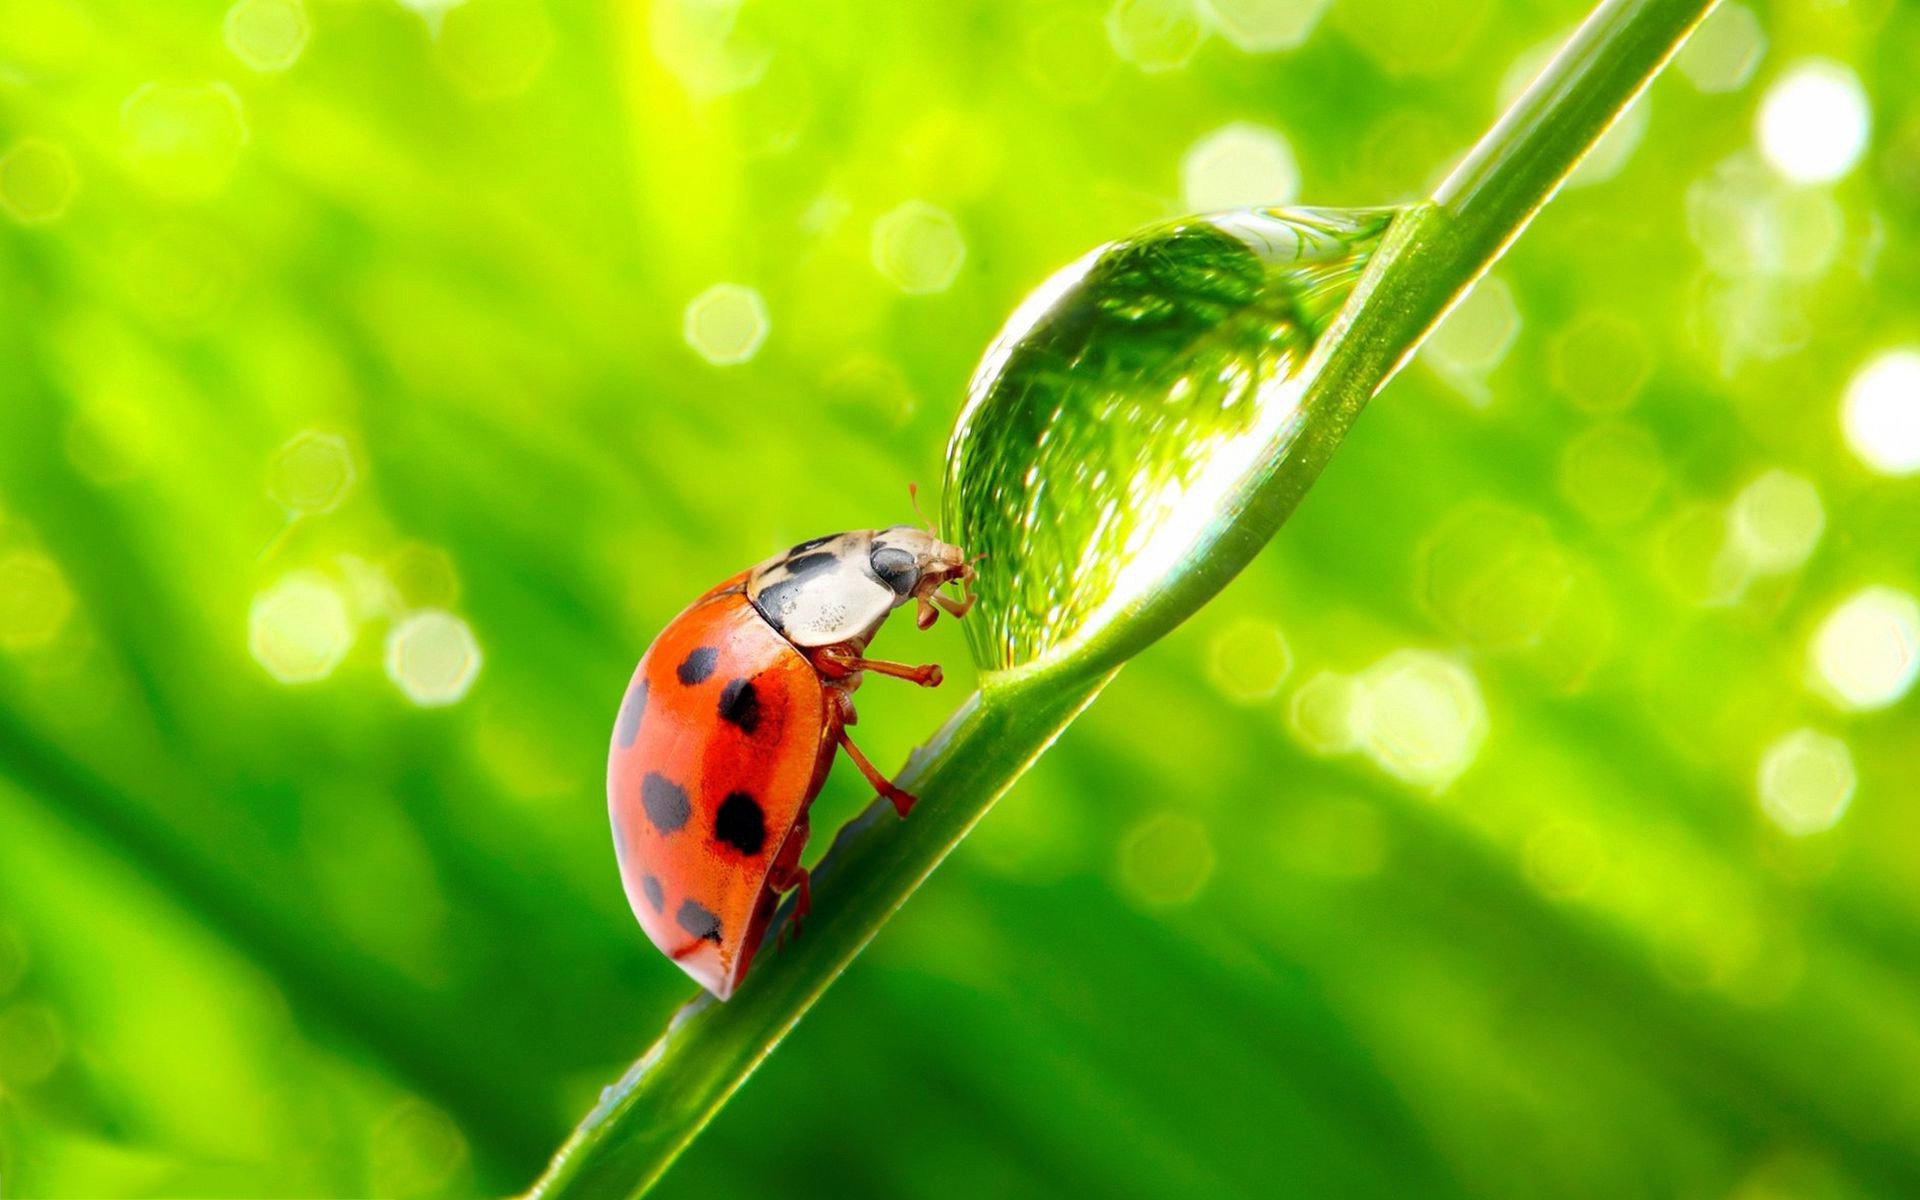 wallpaper bugs,ladybug,macro photography,water,insect,green